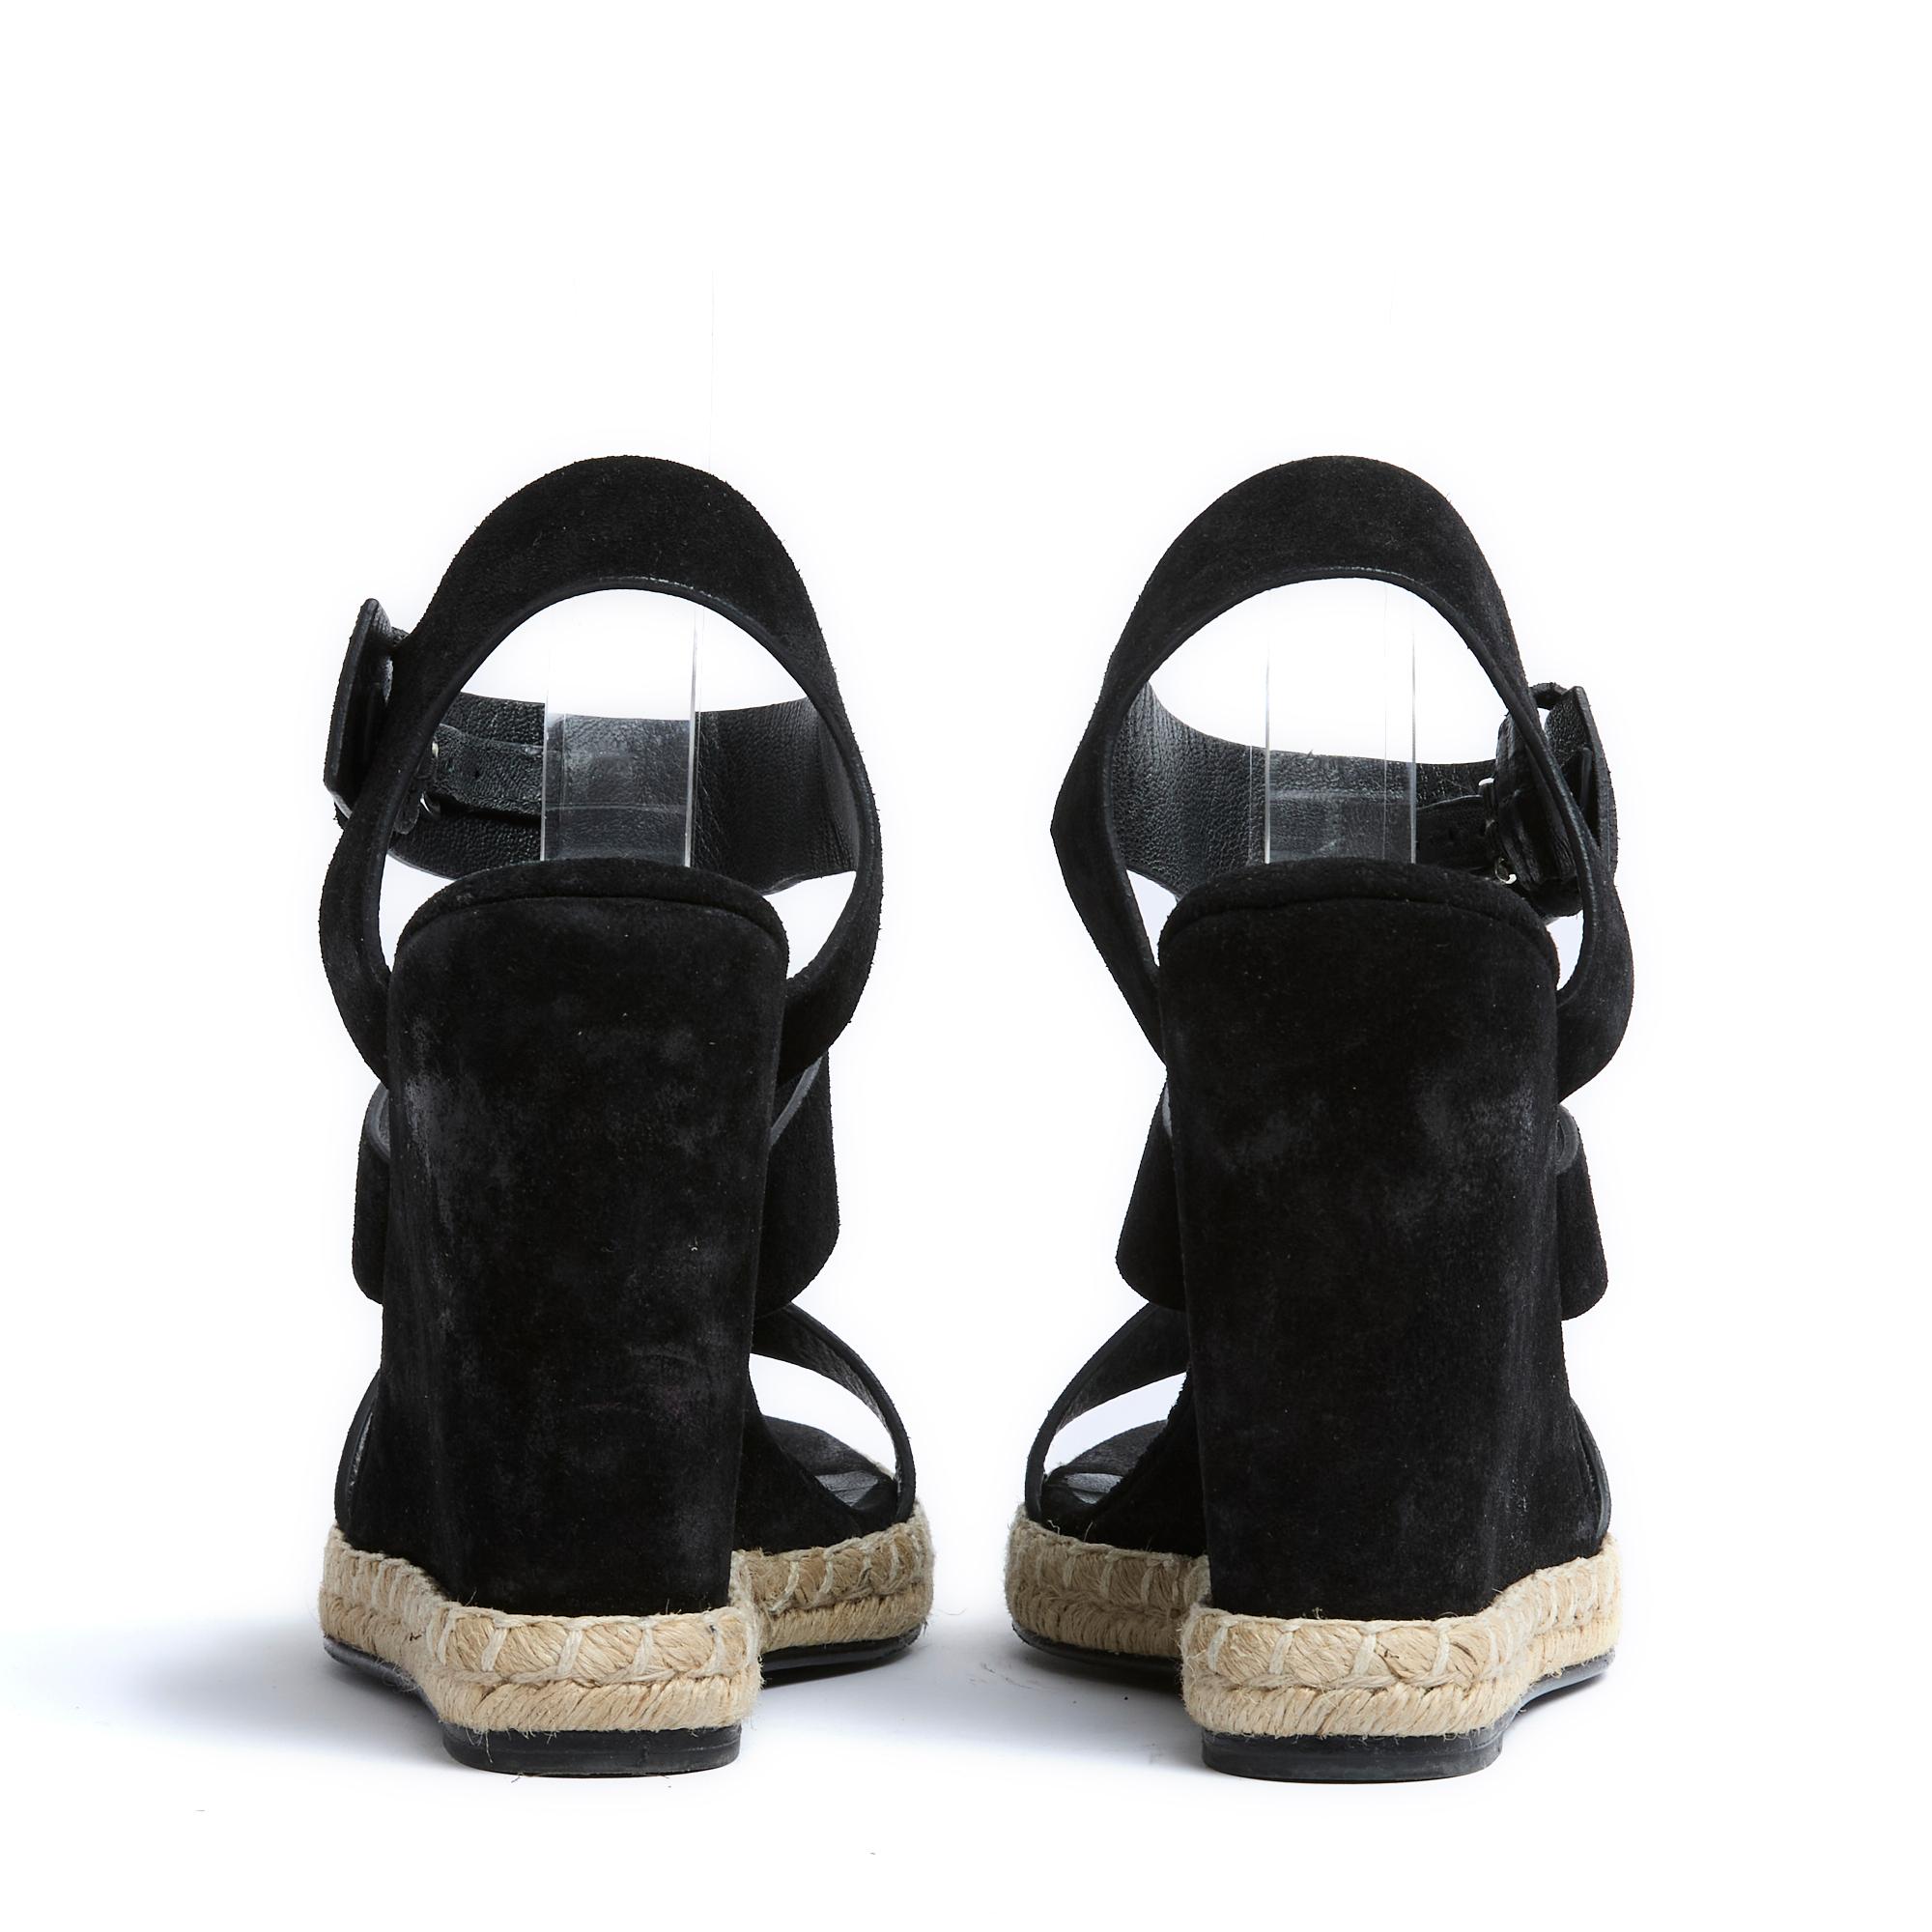 Femenino o masculino Balenciaga Sandales EU39 Black Suede Wedge Heels US8.5 en venta